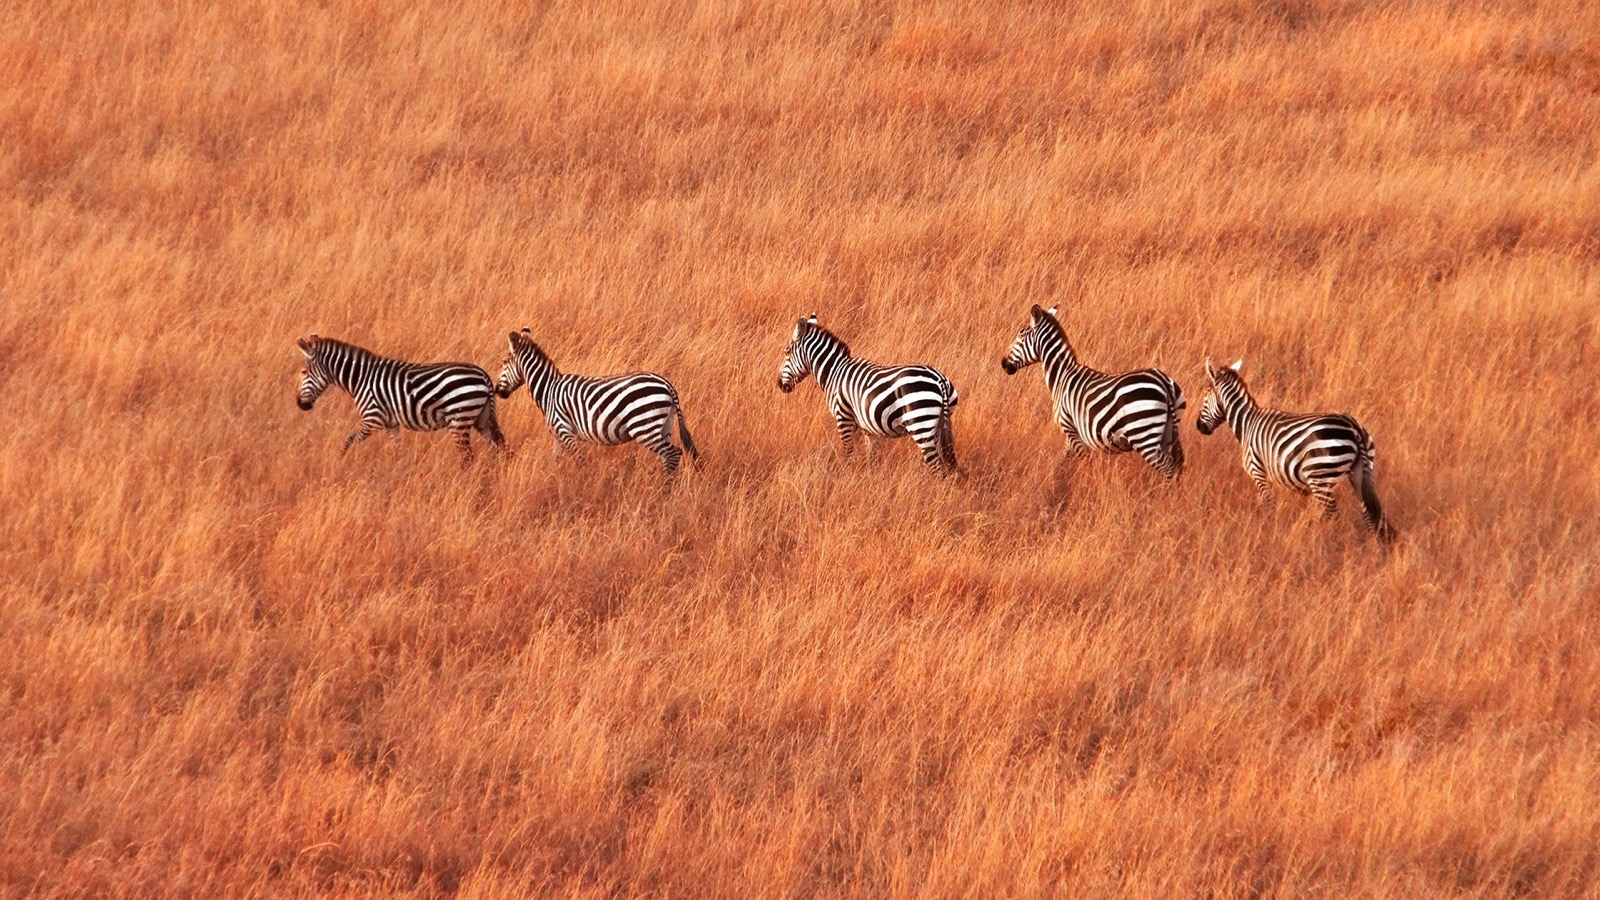 Zebras at Maasai Mara savanna, Kenya